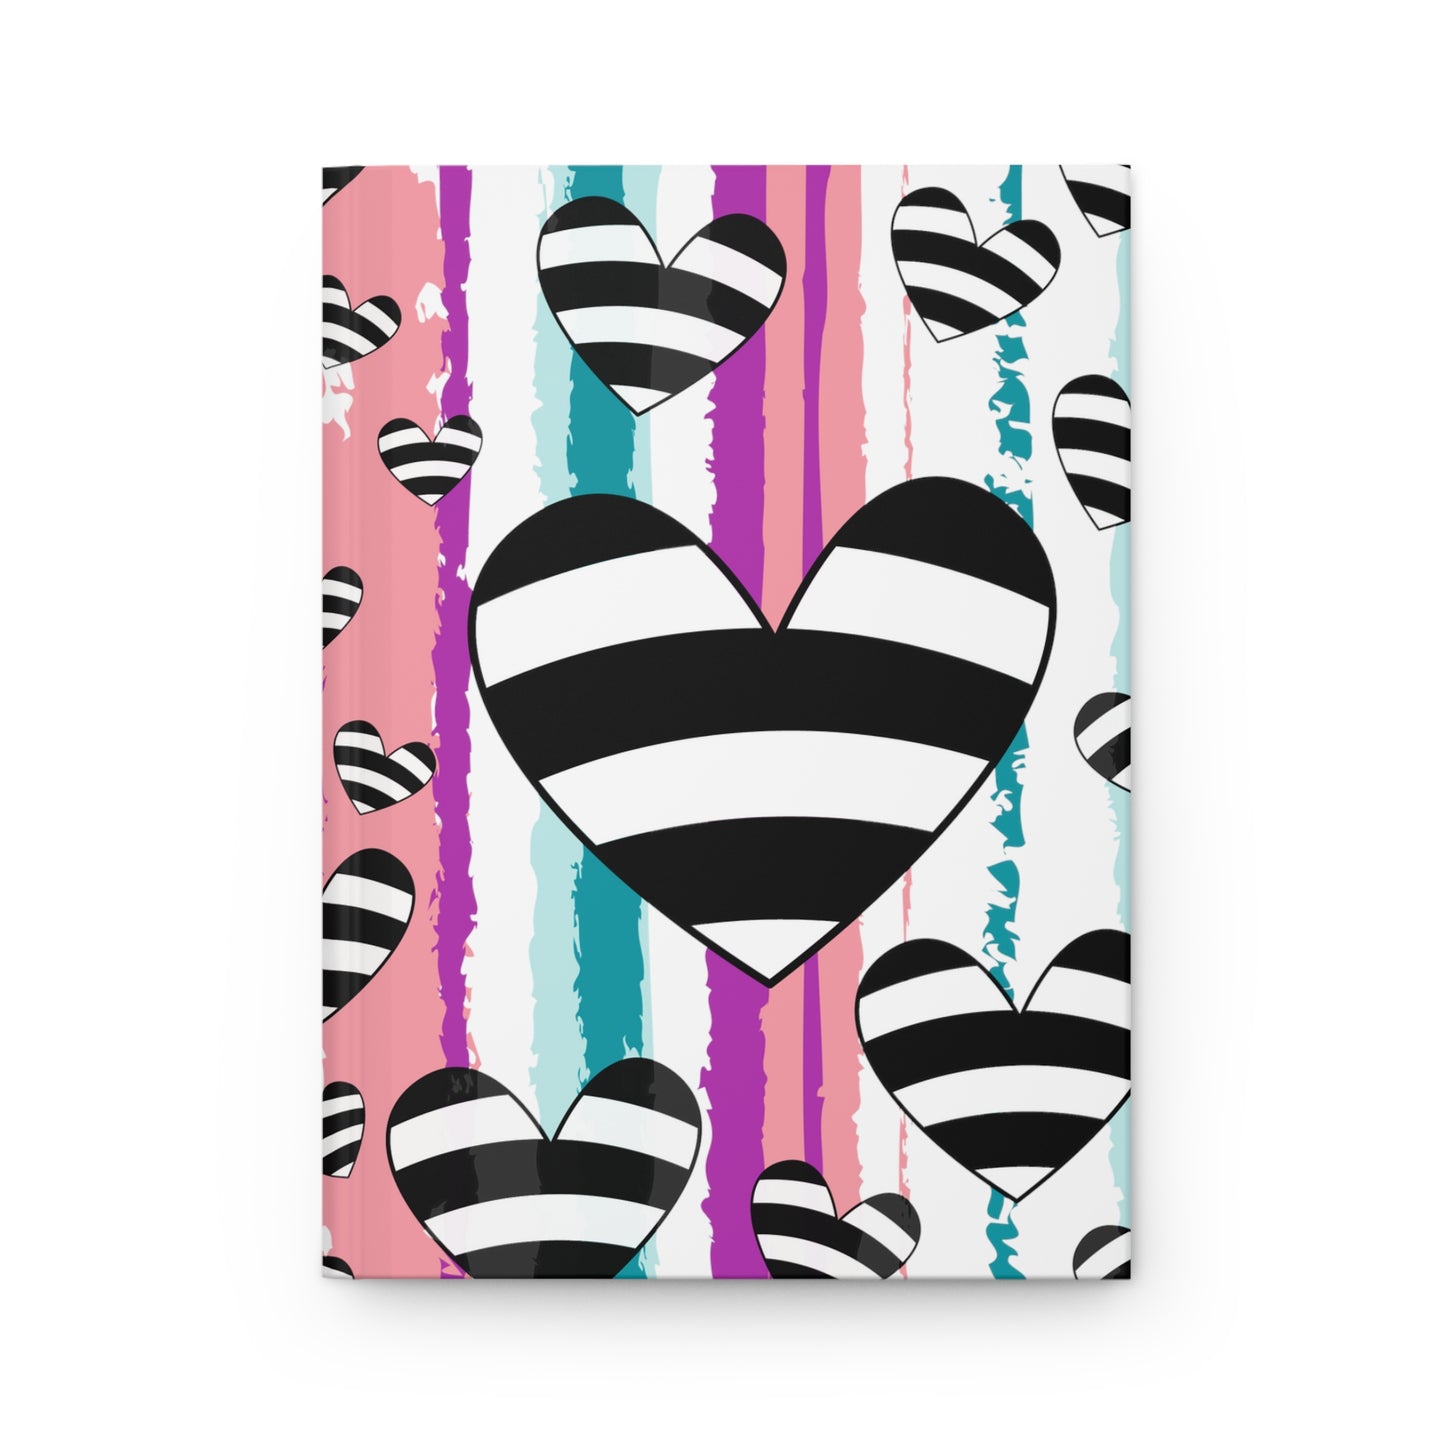 Ol' Hearts Hardcover Journal, Decorative Journal, Pattern Journal, Design Journal, Cute Journals, Personal Journal, Personal Diary,Hardcover Journal Matte